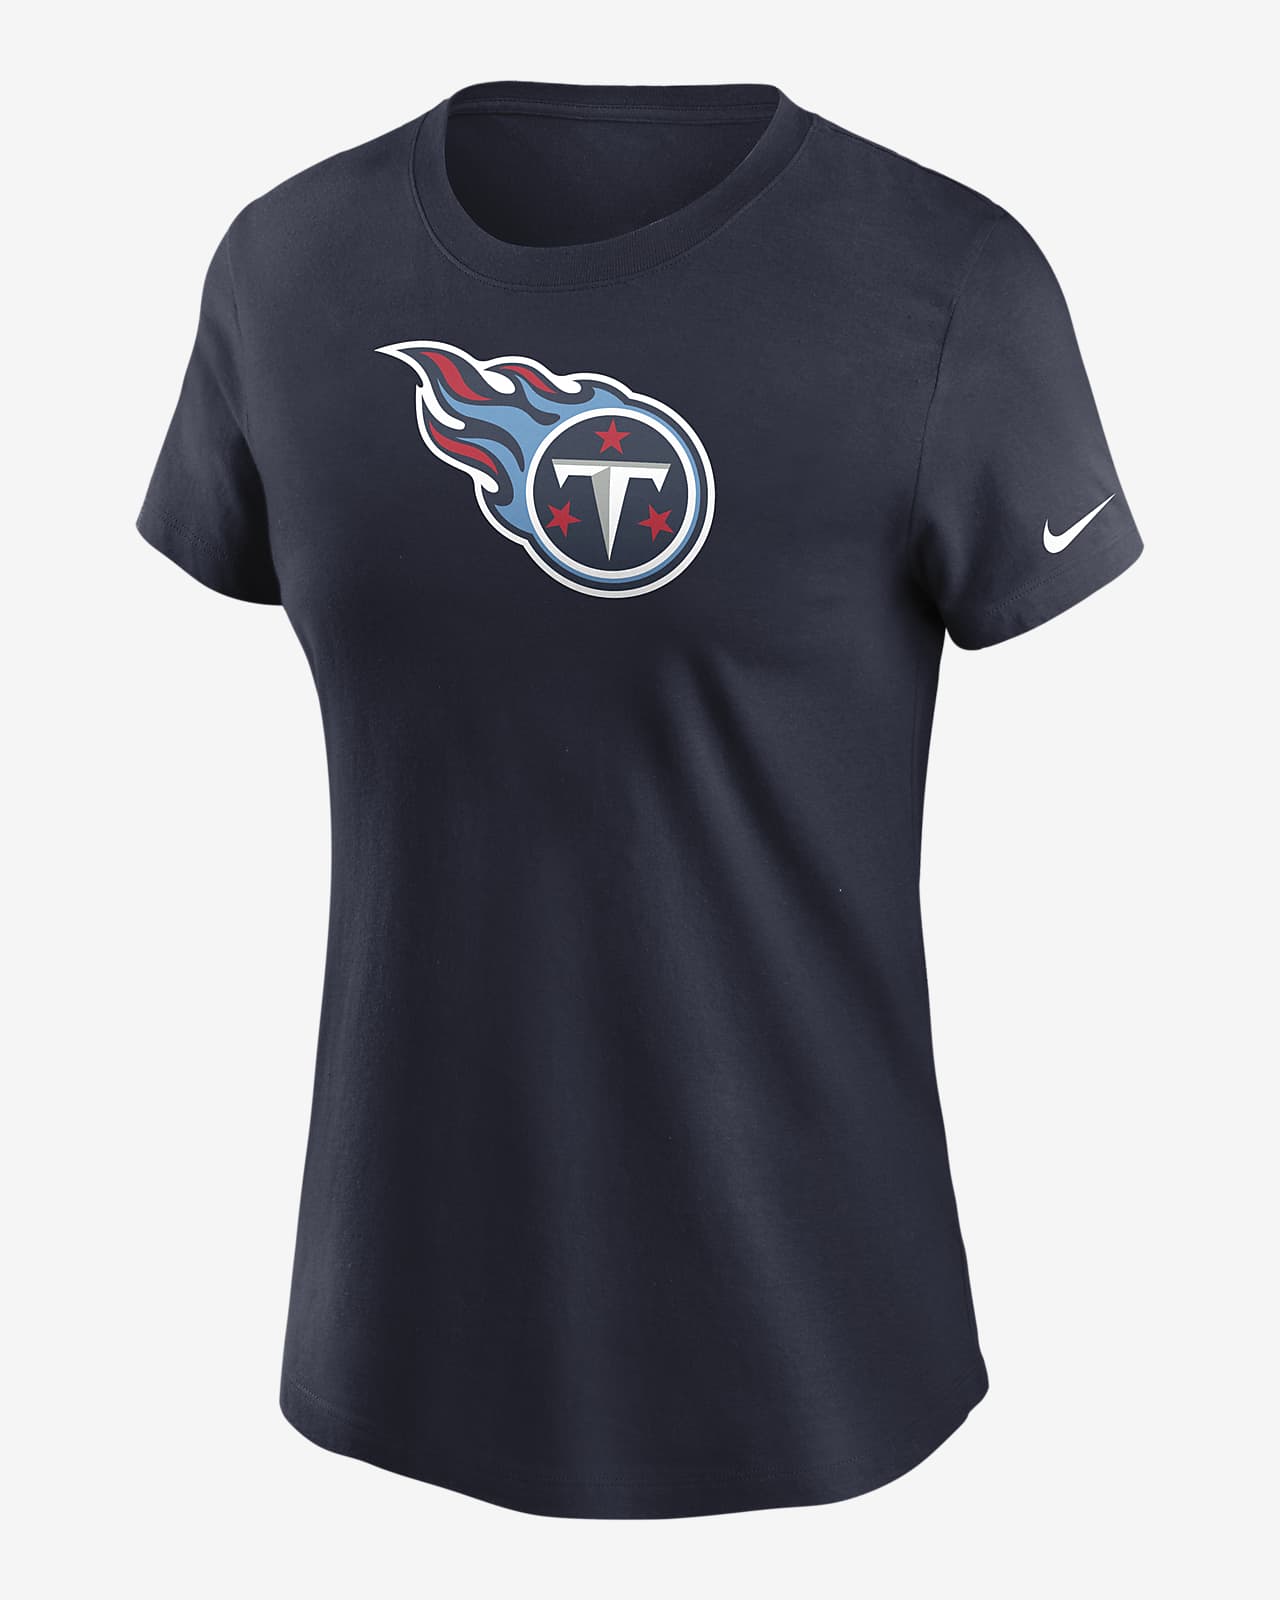 Nike Logo (NFL Tennessee Titans) Women's T-Shirt.